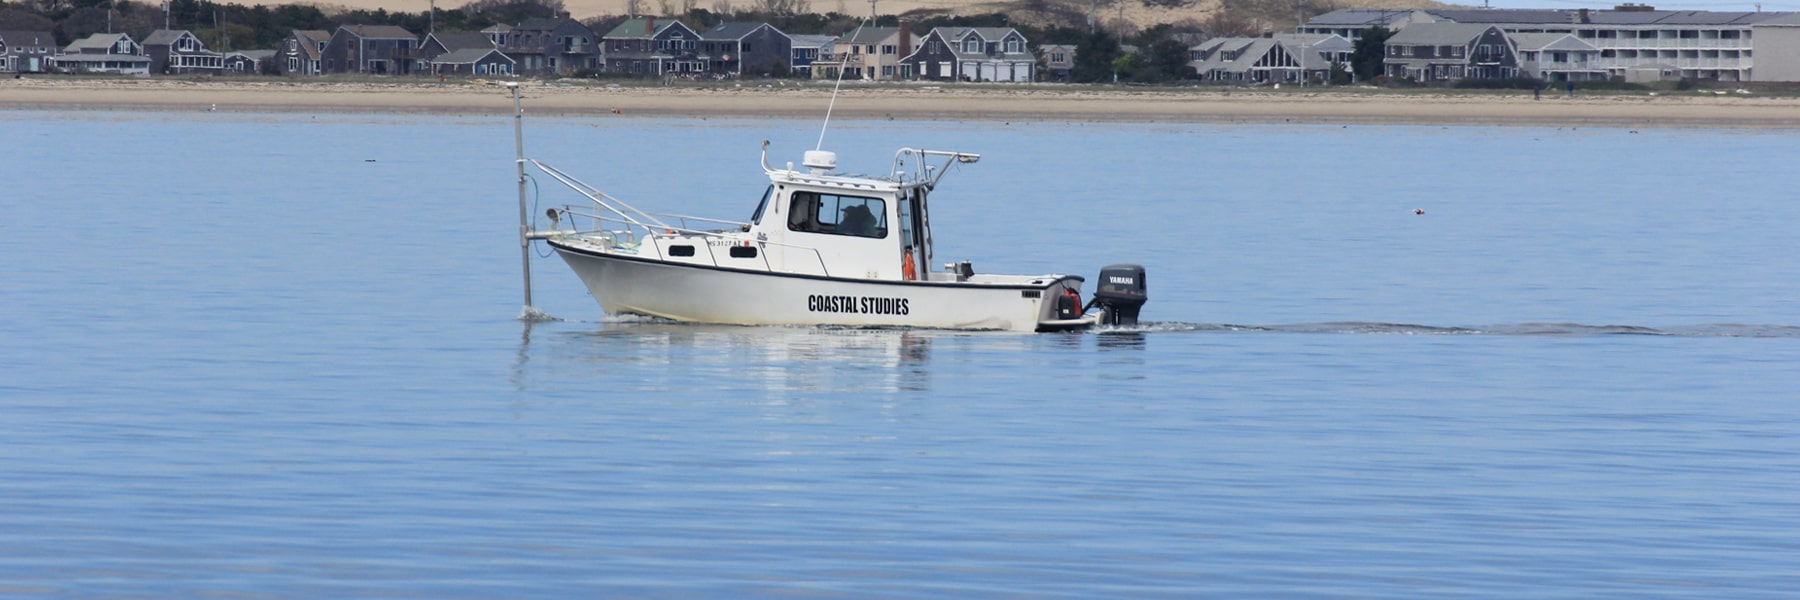 coastal studies boat in Provincetown Harbor